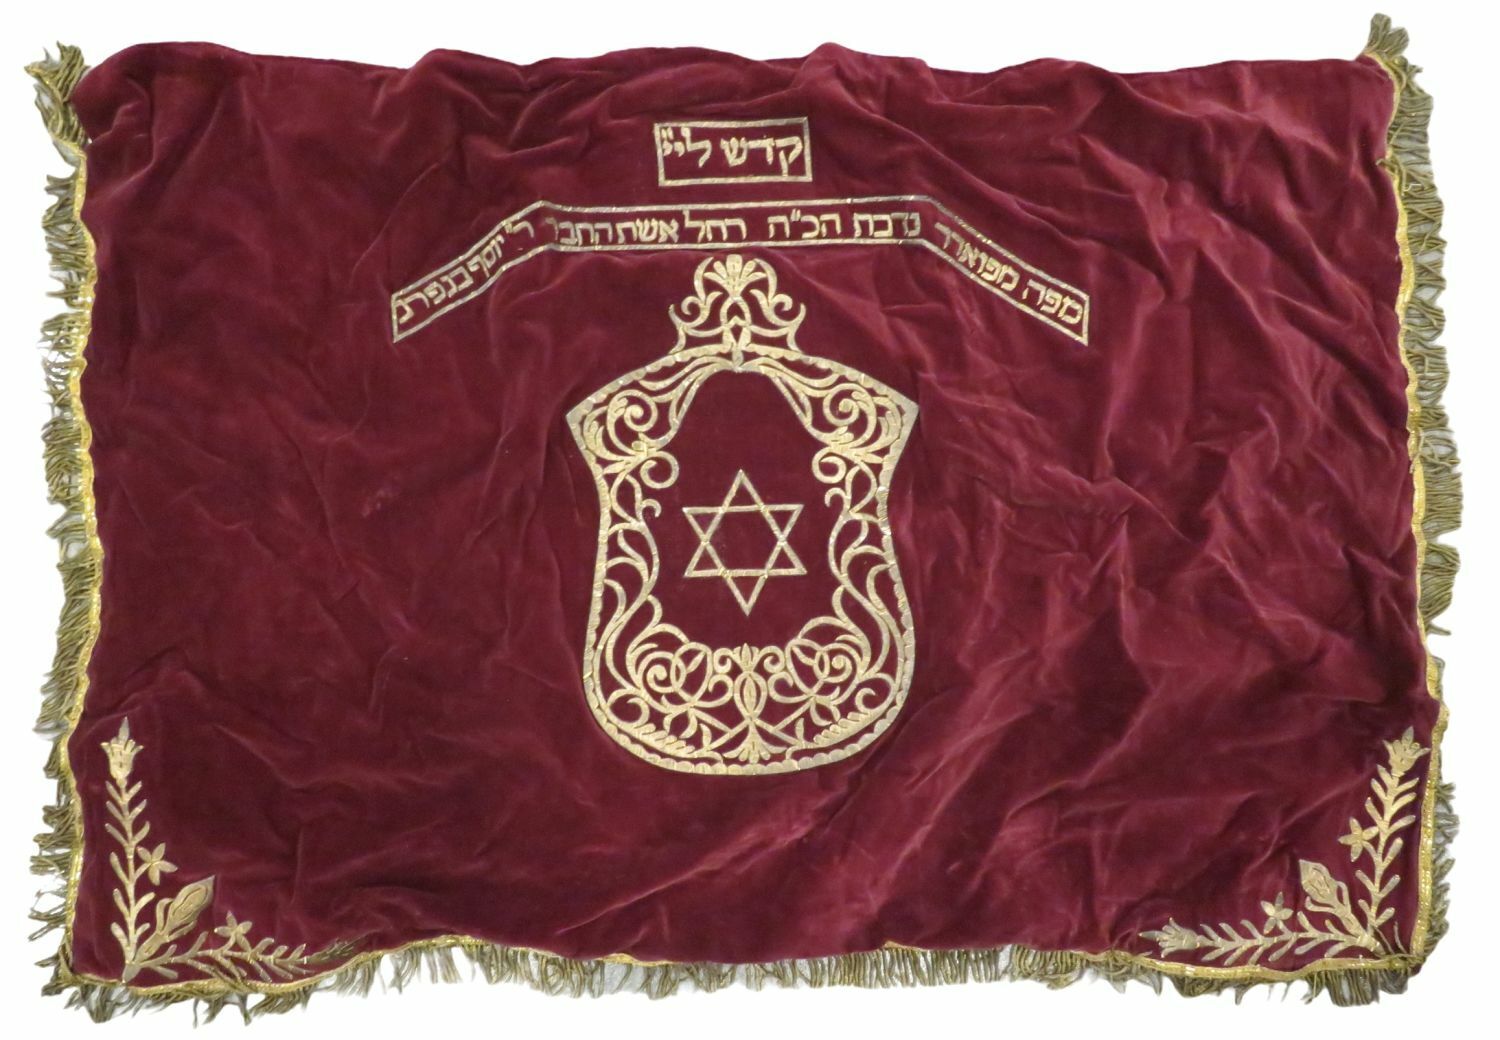 Parochet, North Africa circa 1900, woven addition for Yom Kippur, Judaica